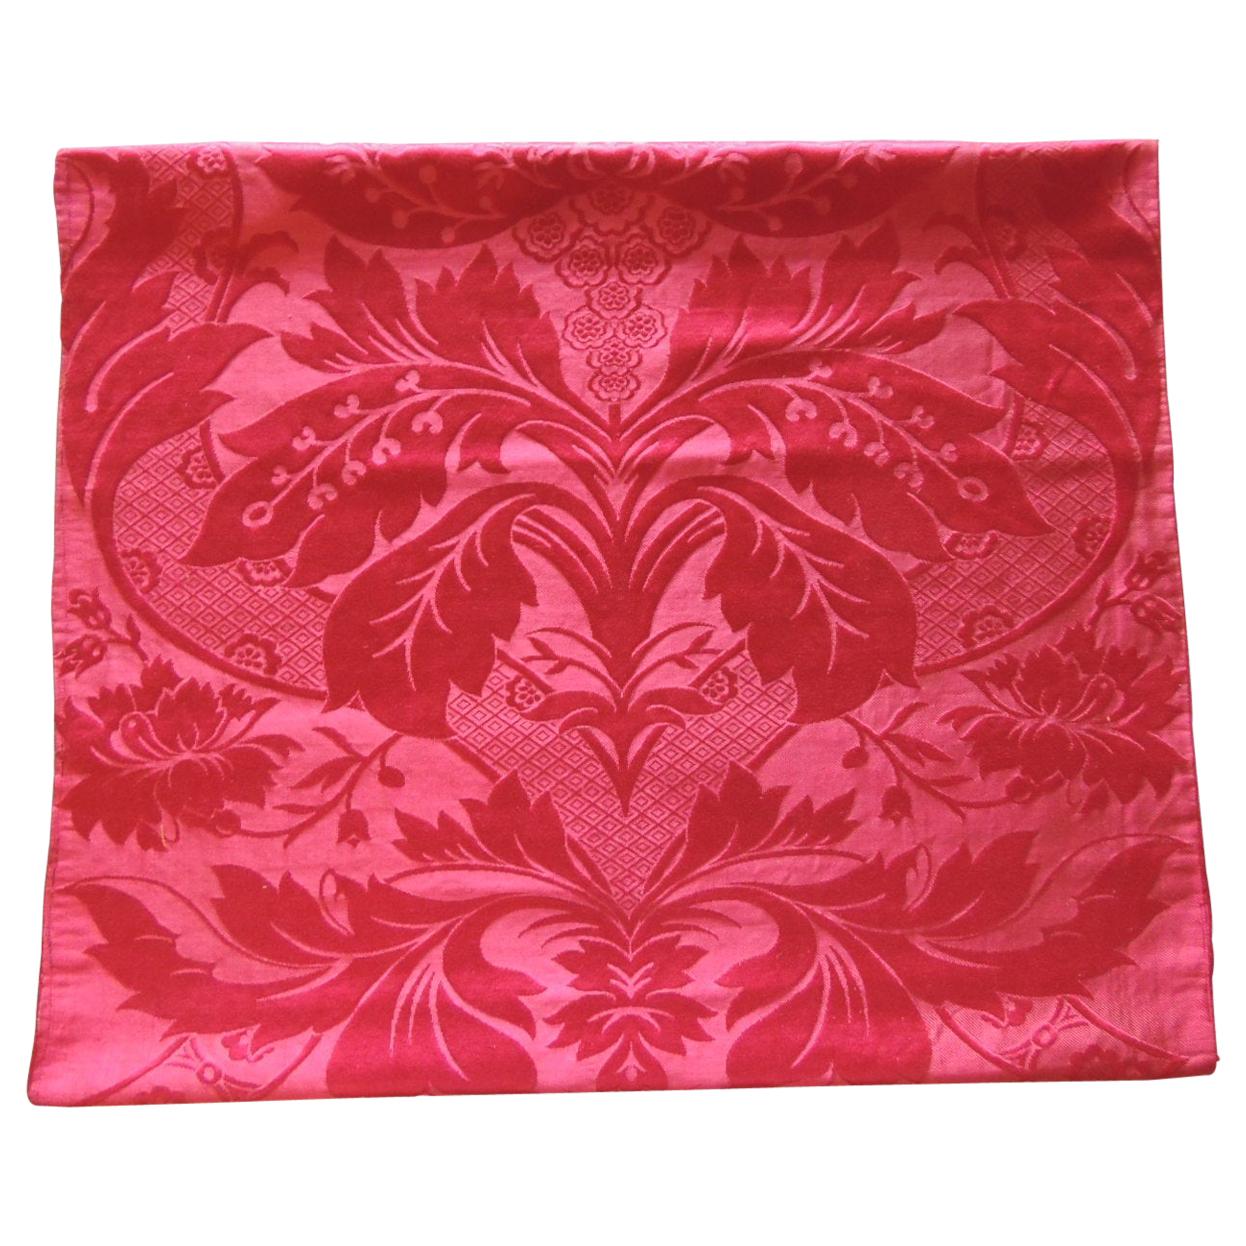 Antique Red Silk Damask Textile Panel